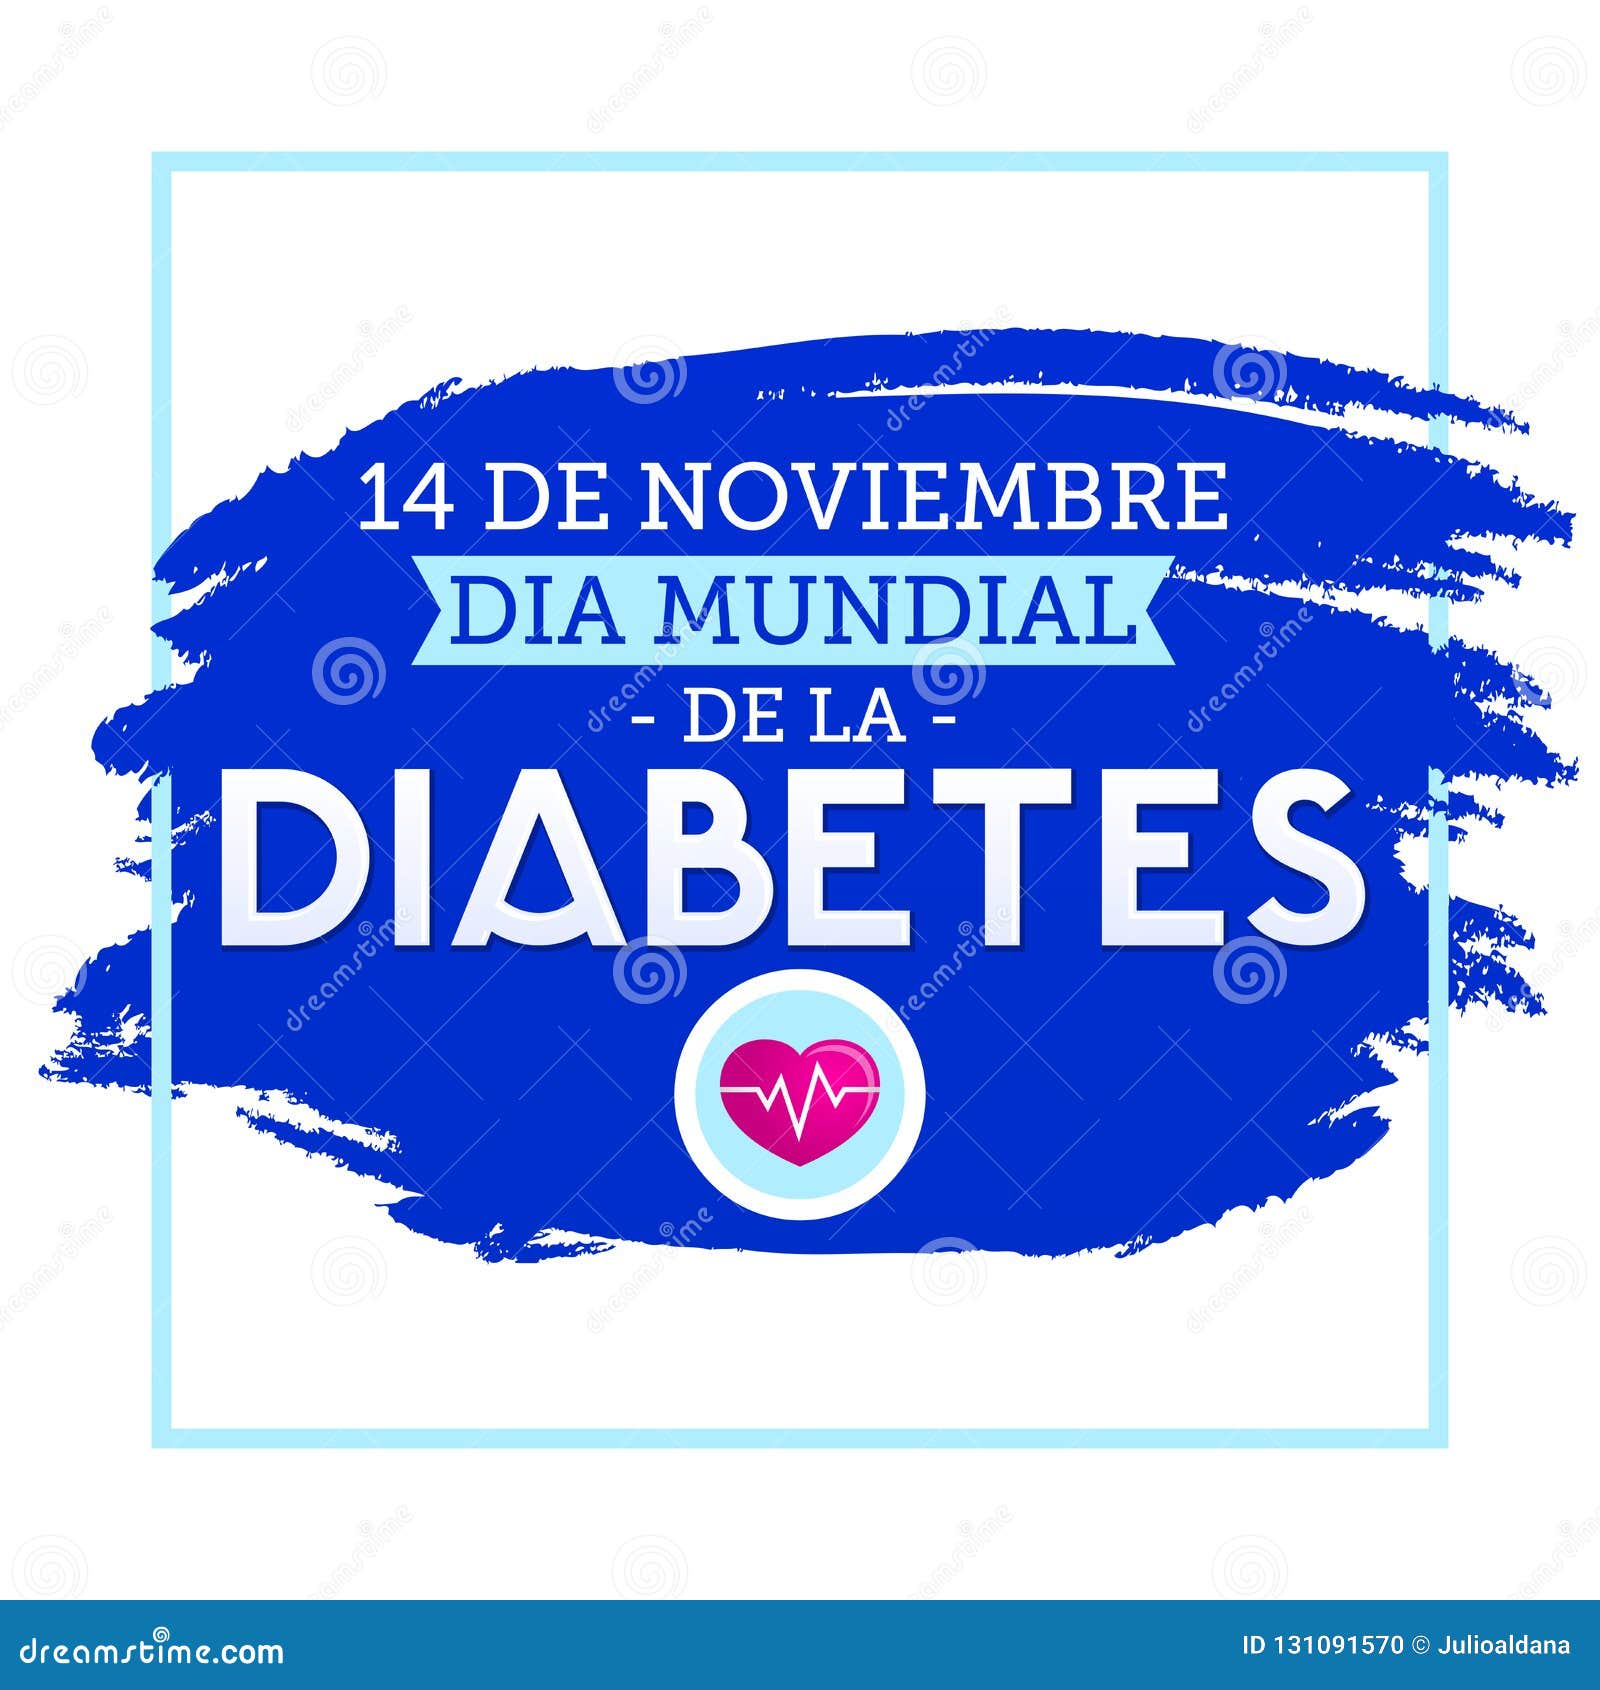 dia mundial de la diabetes, world diabetes day 14 november spanish text